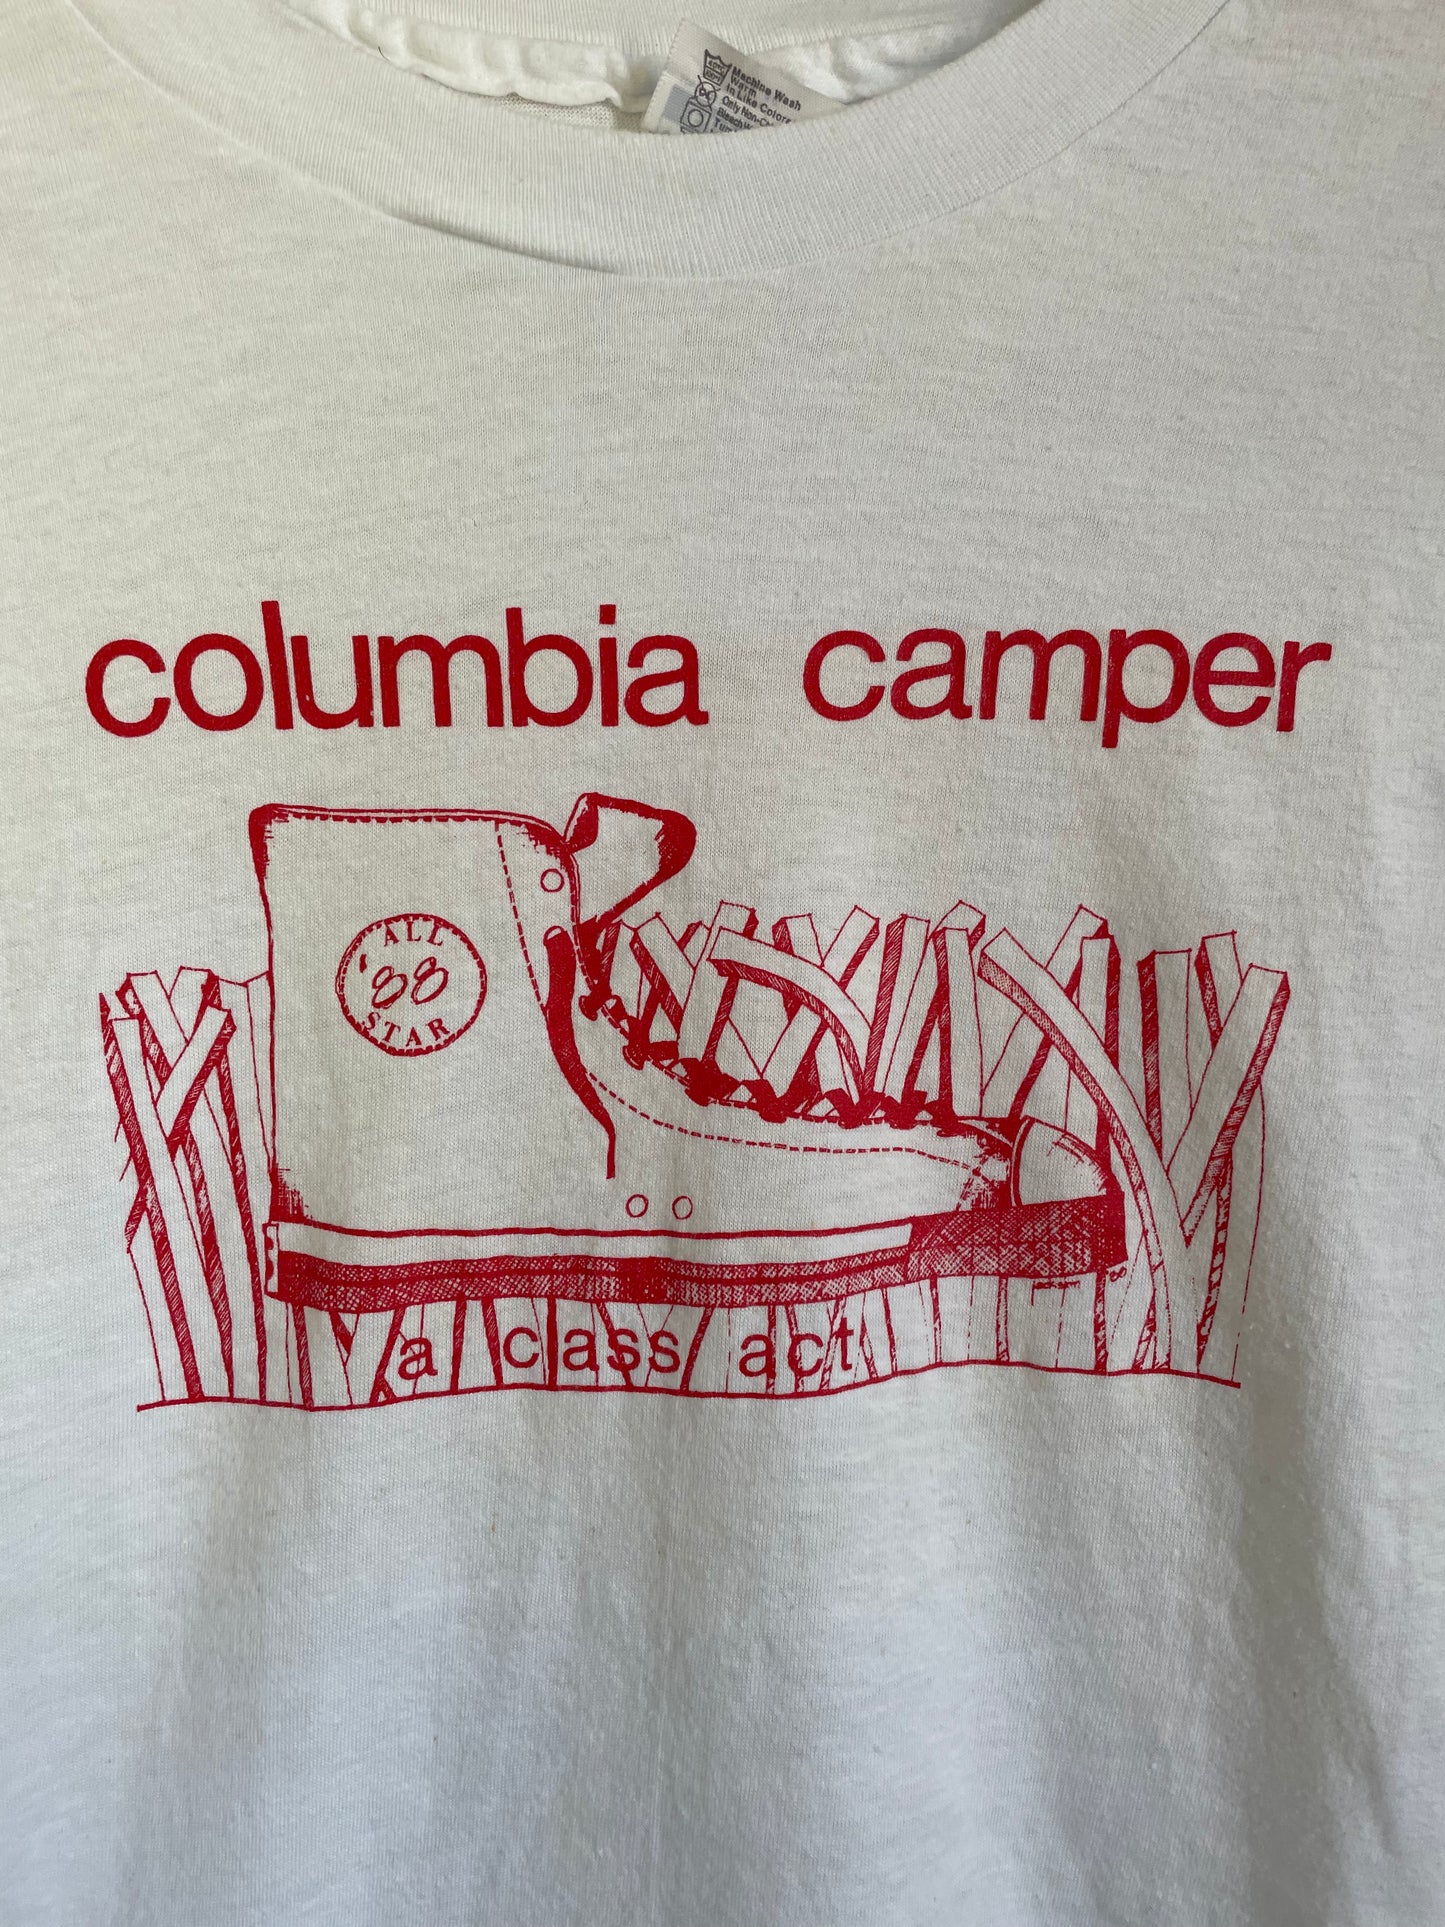 80s Columbia Camper Tee